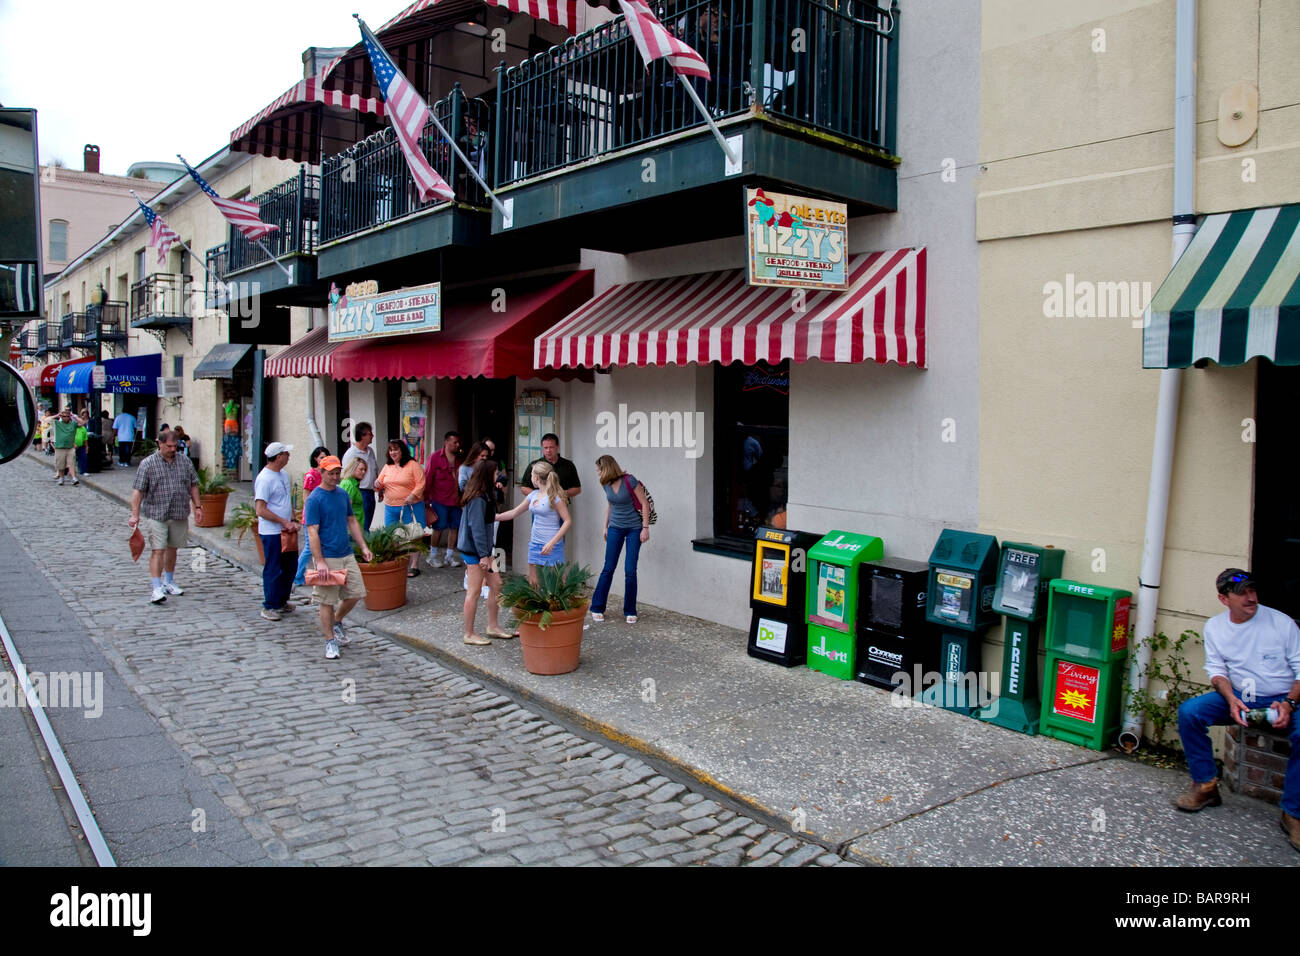 Hotels,restaurants and popular entertainment on  River Street, Southern USA City of Savannah, Georgia,USA,America Stock Photo